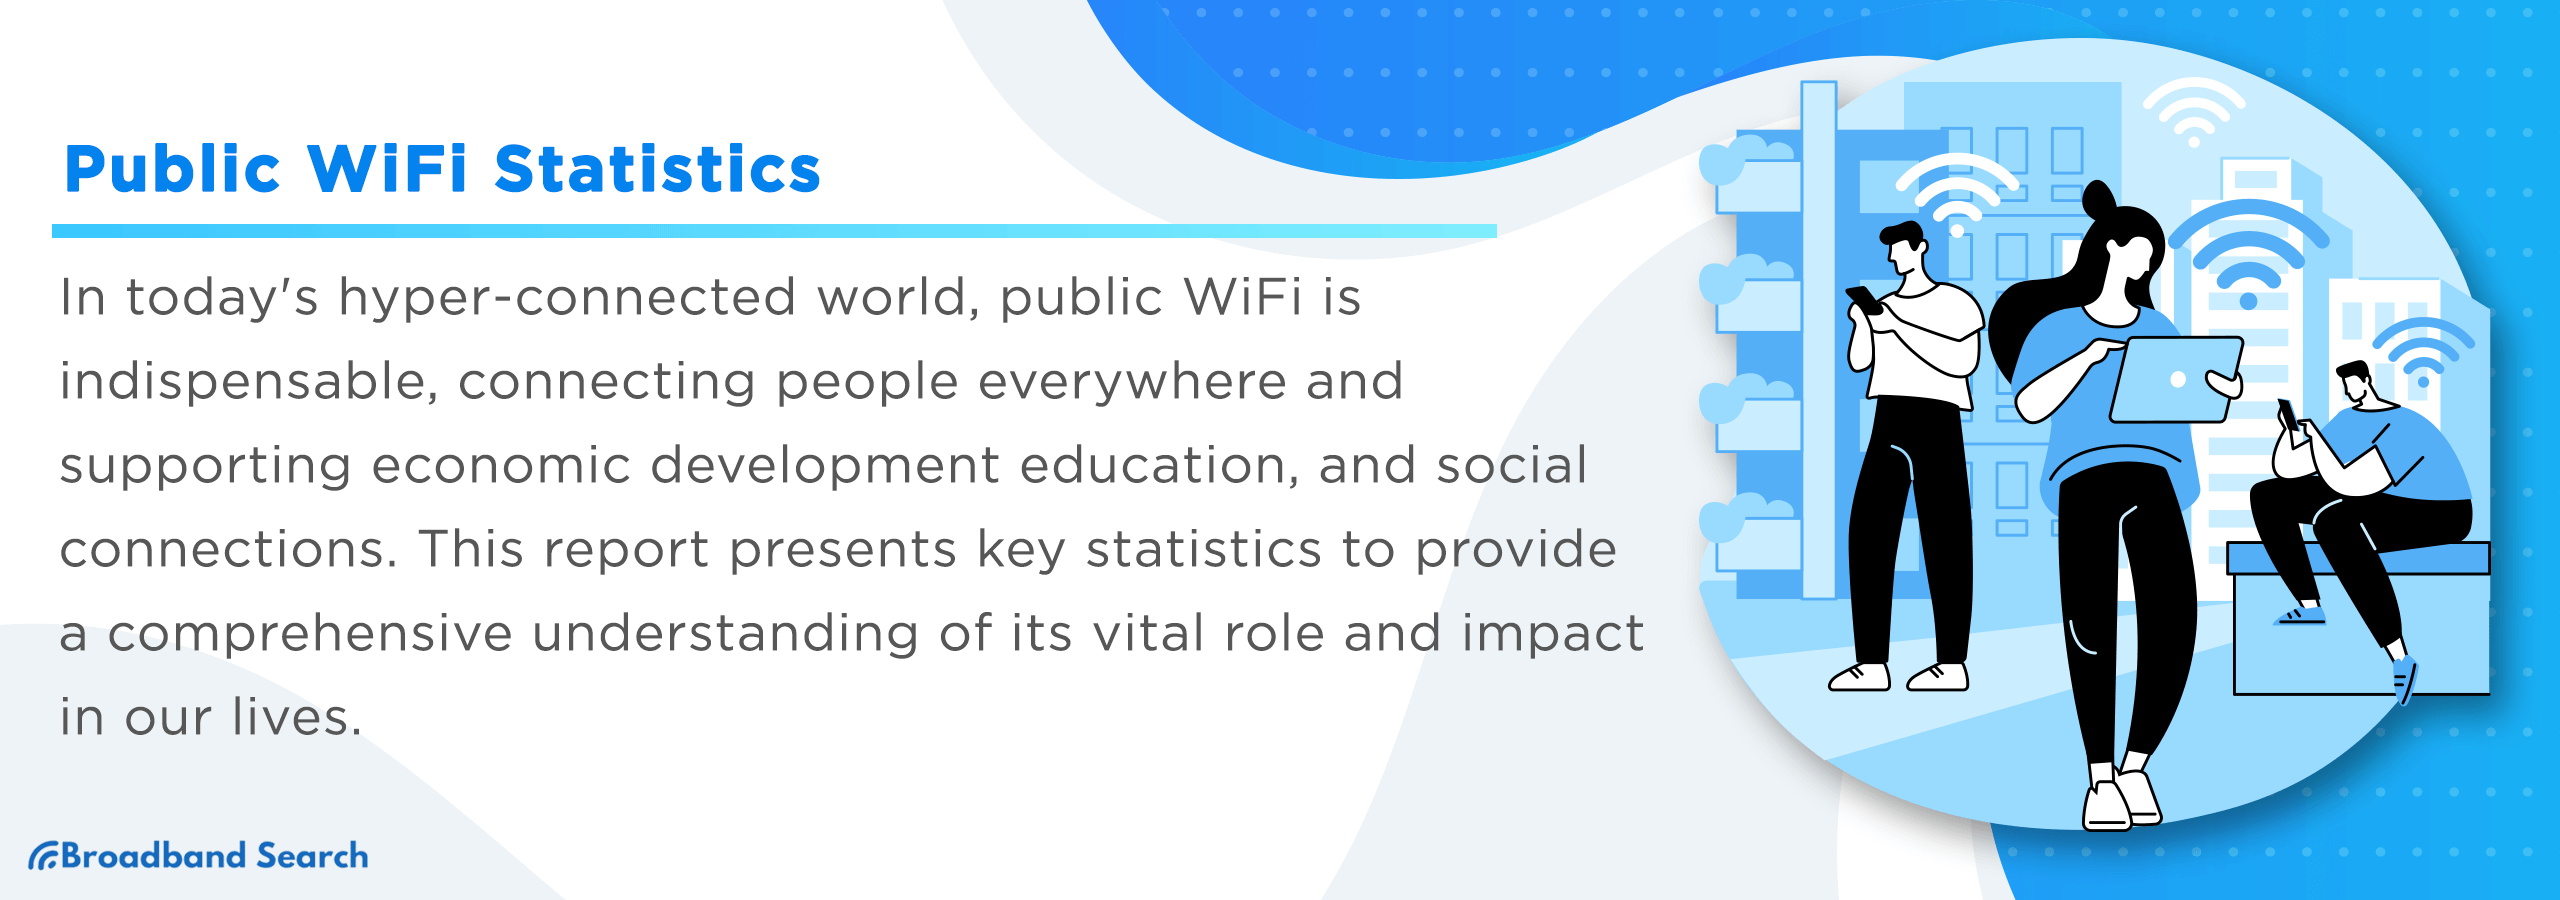 Vital Statistics on Public WiFi: Usage, Safety & Trends